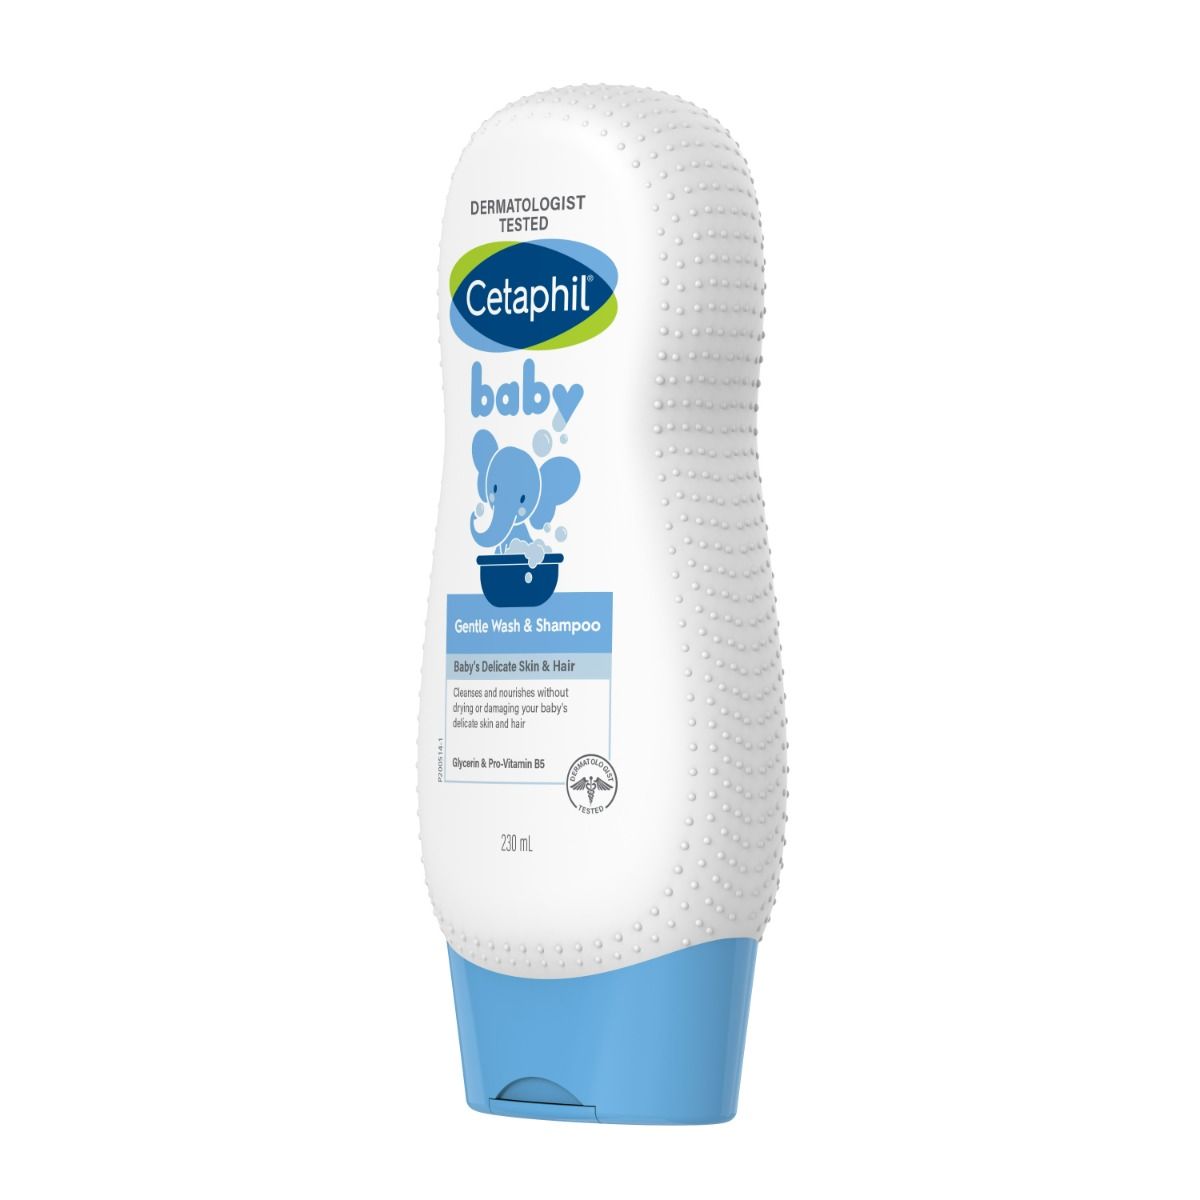 Cetaphil Baby Gentle Wash & Shampoo, 230 ml, Pack of 1 